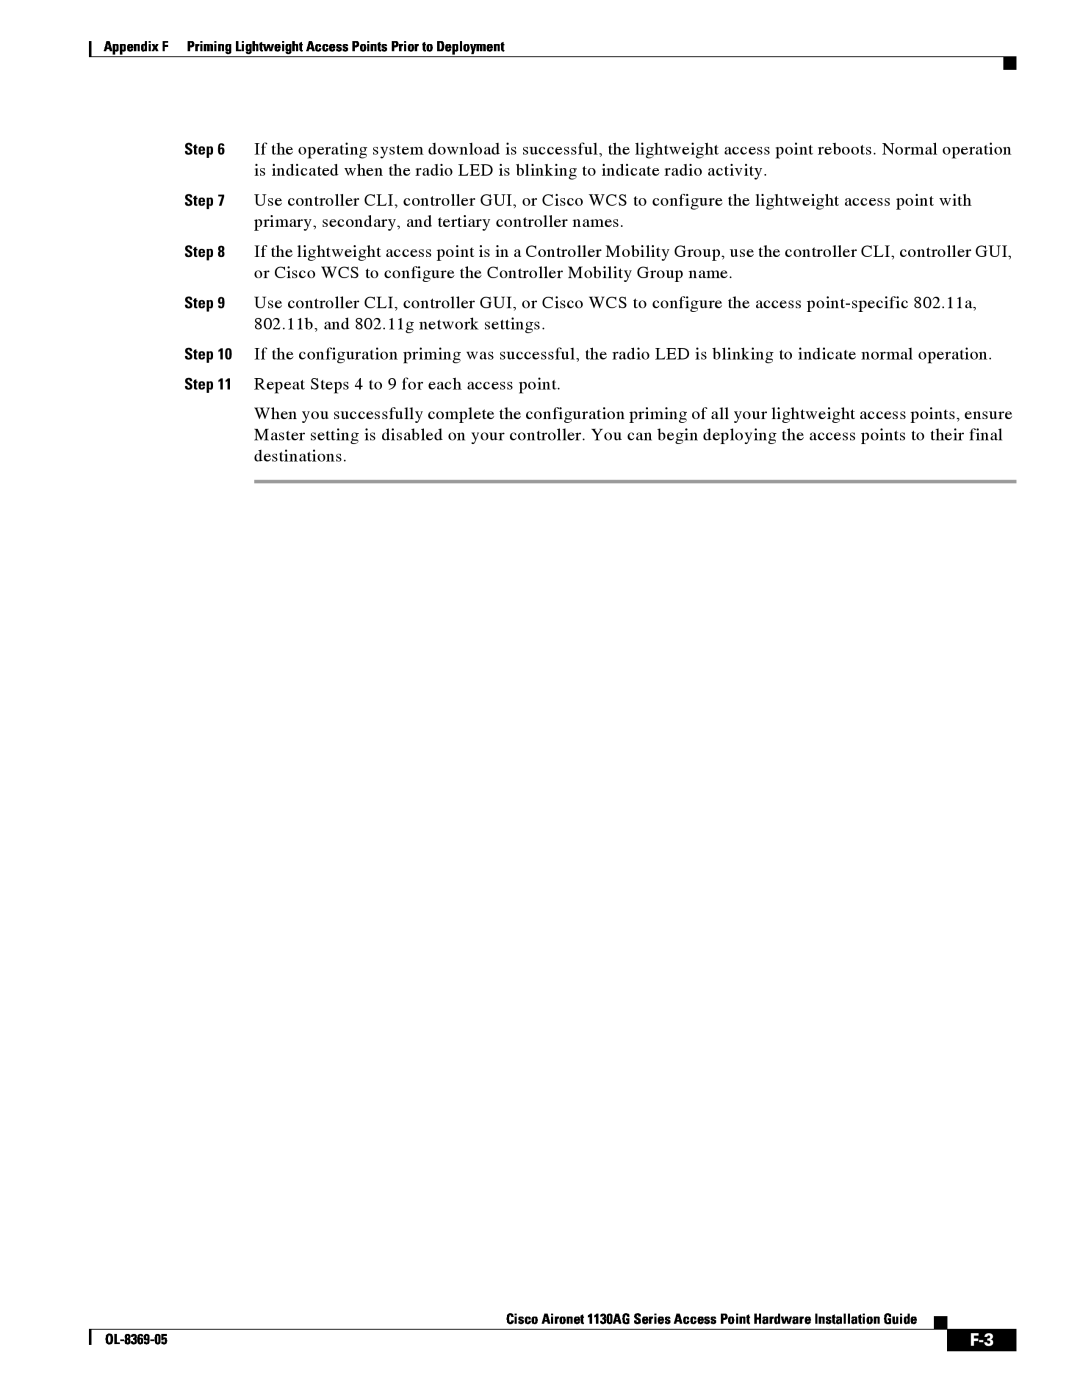 Cisco Systems 1130AG manual 